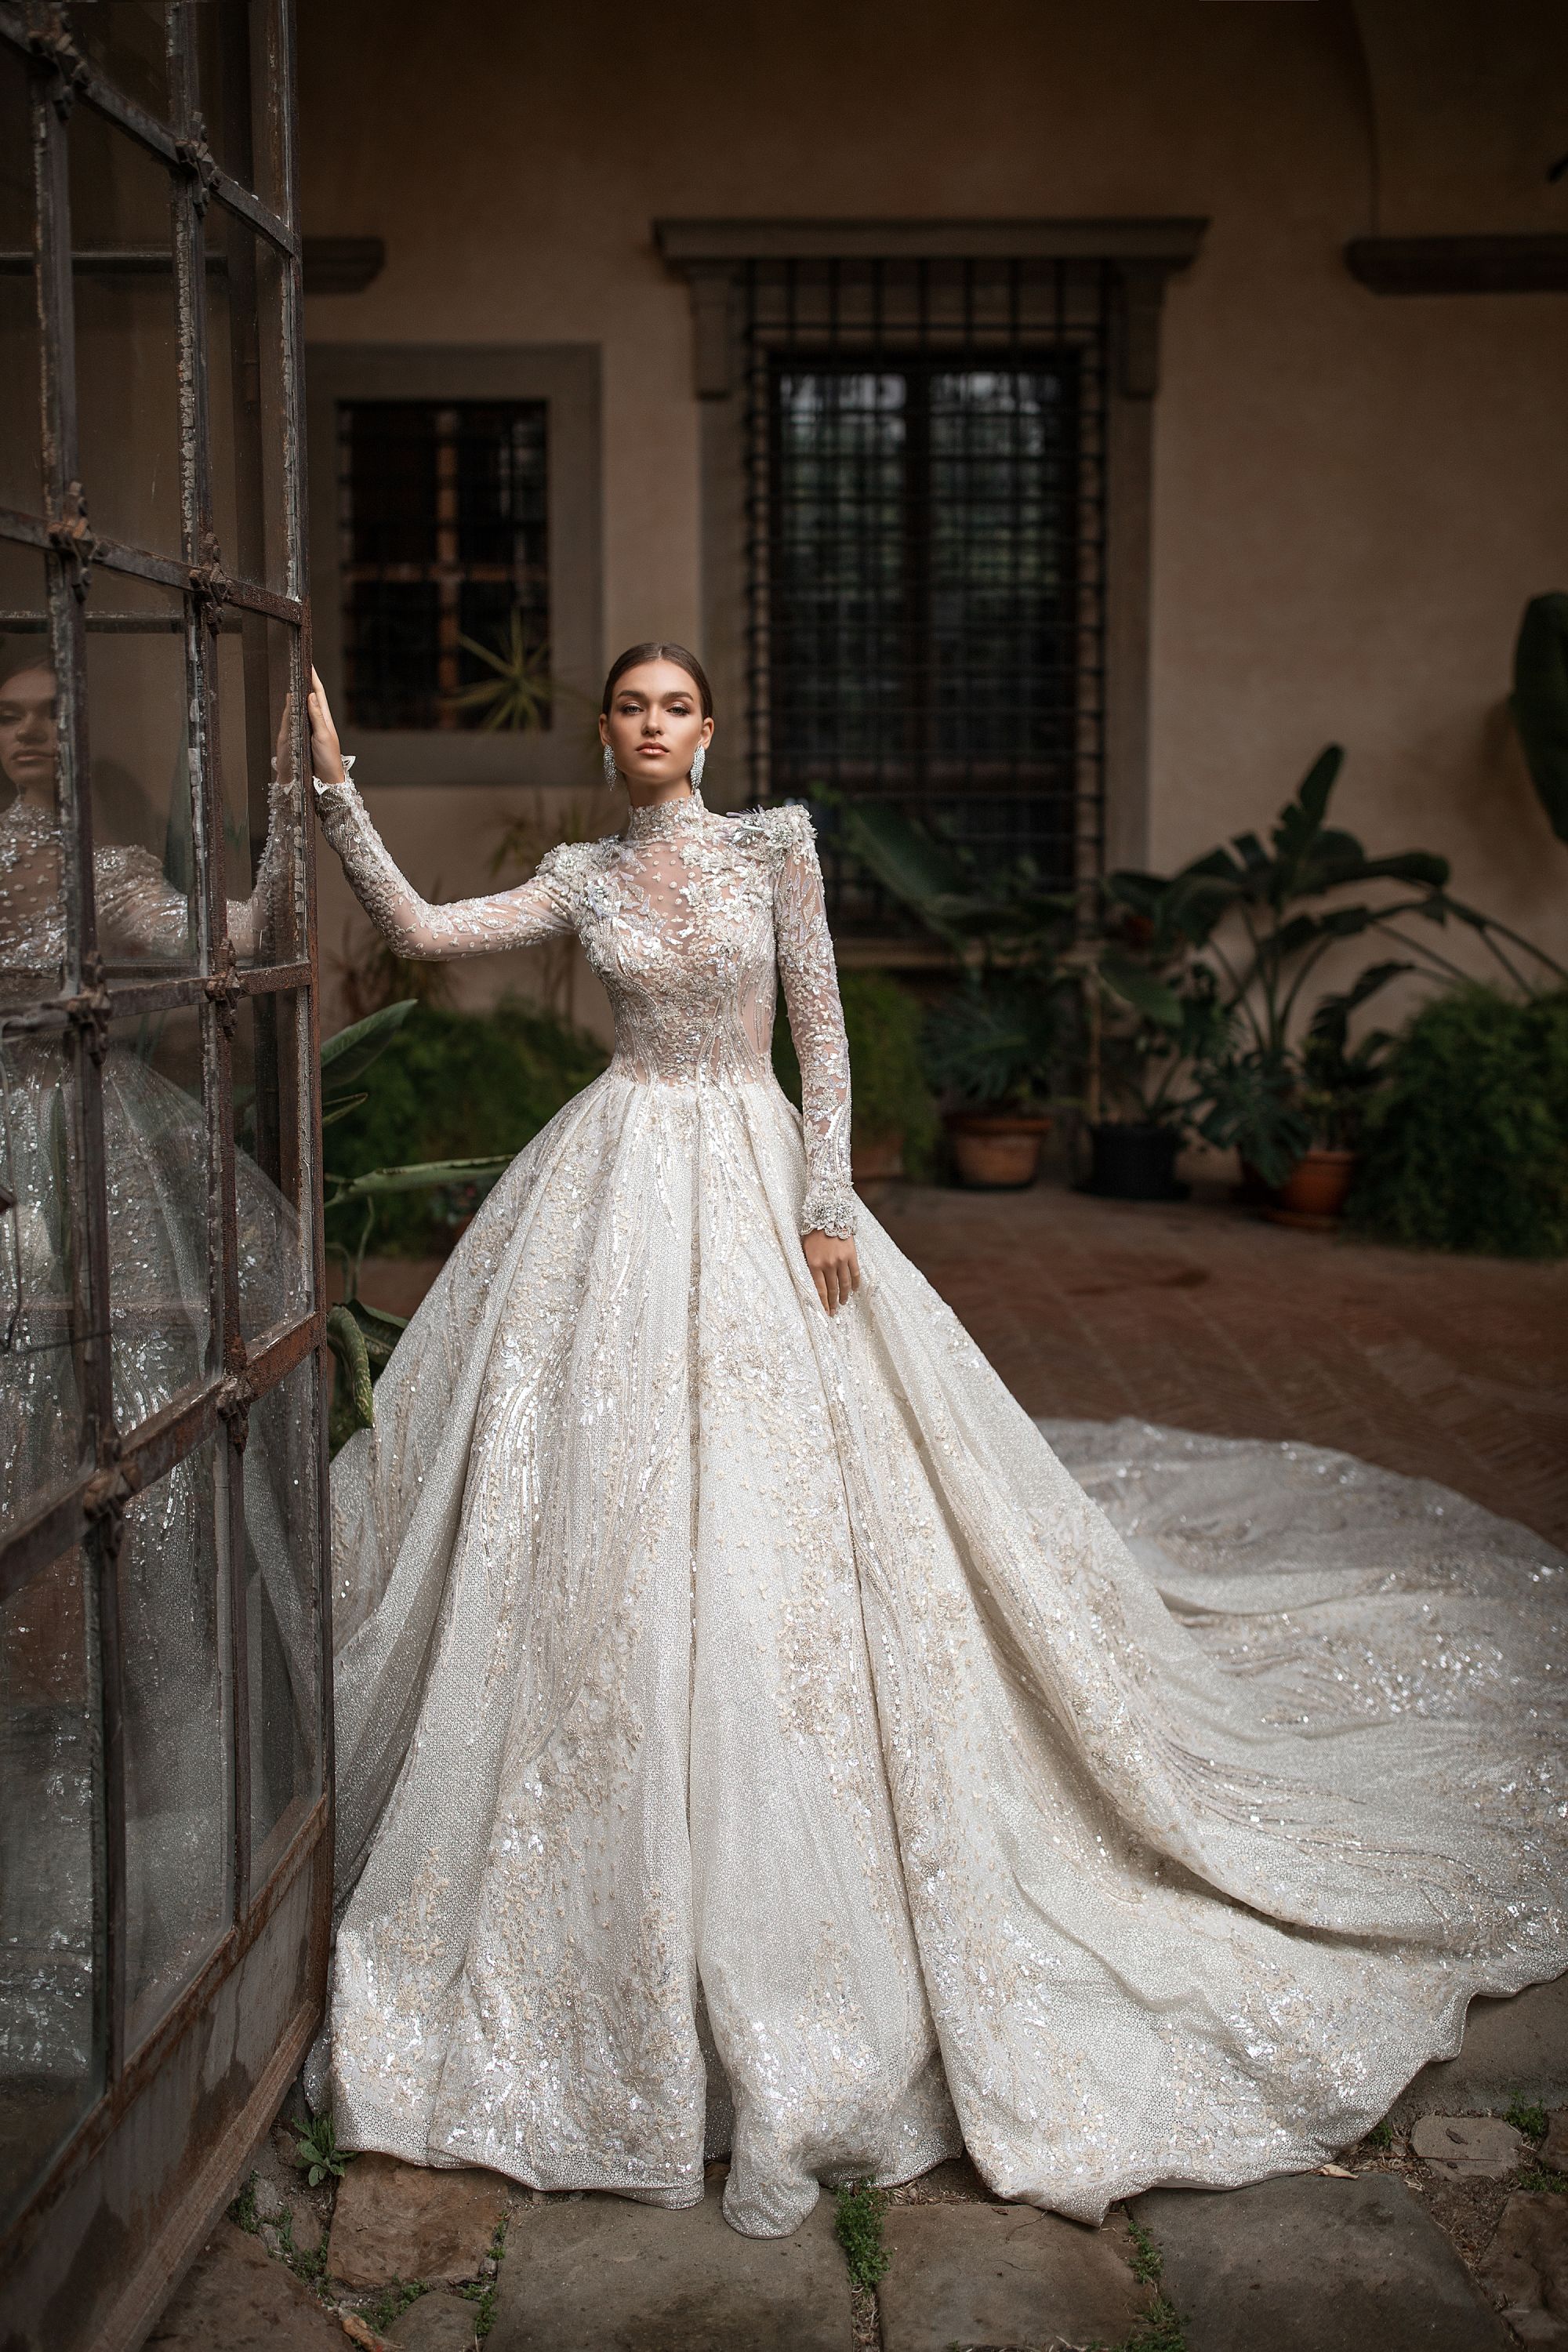 Ultra-Stylish New Wedding Dresses by Mila Bridal (for under $1,000!)